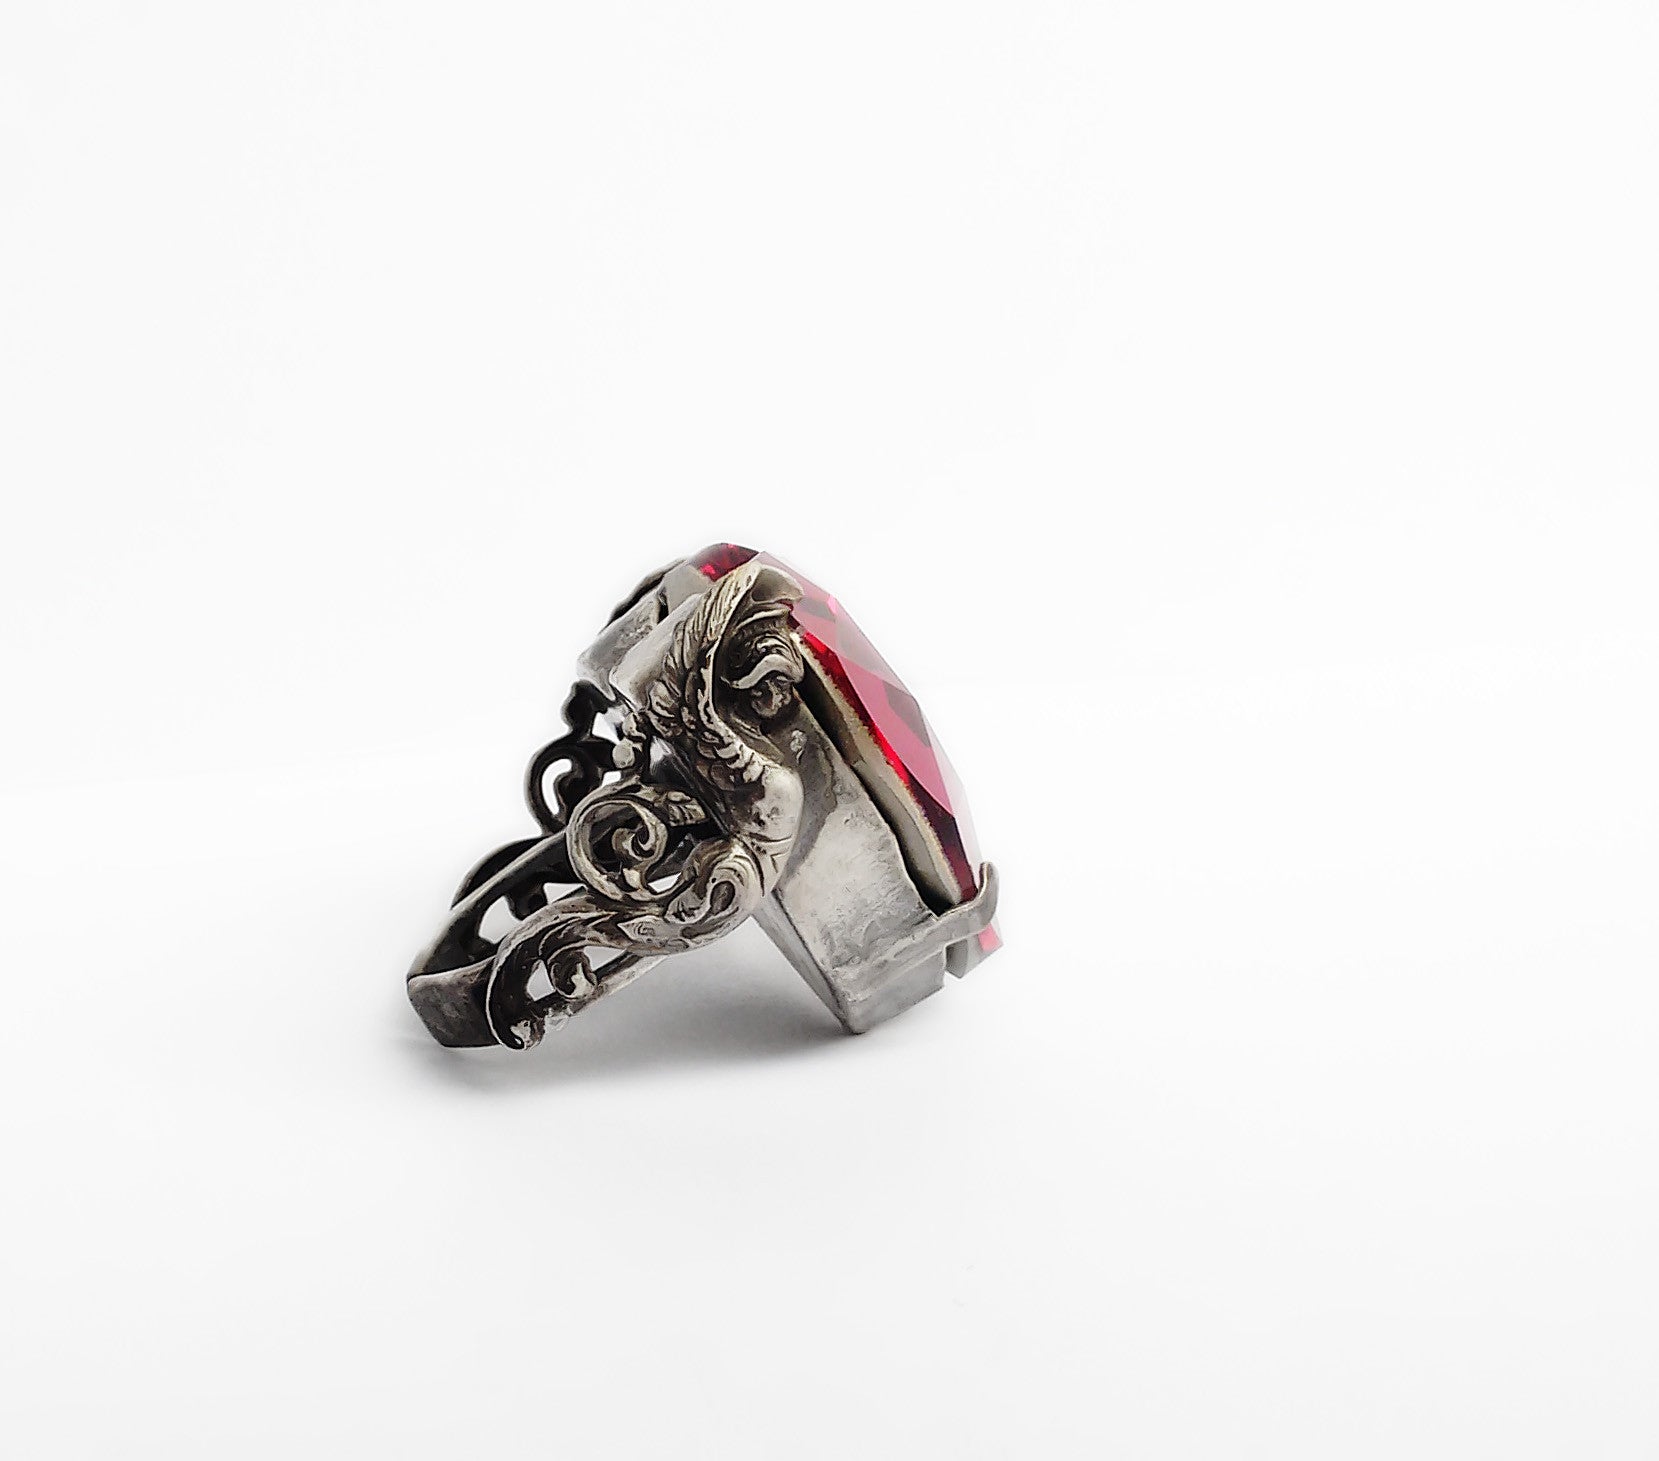 Valkyries Heart Ring - Aranwen's Jewelry
 - 2